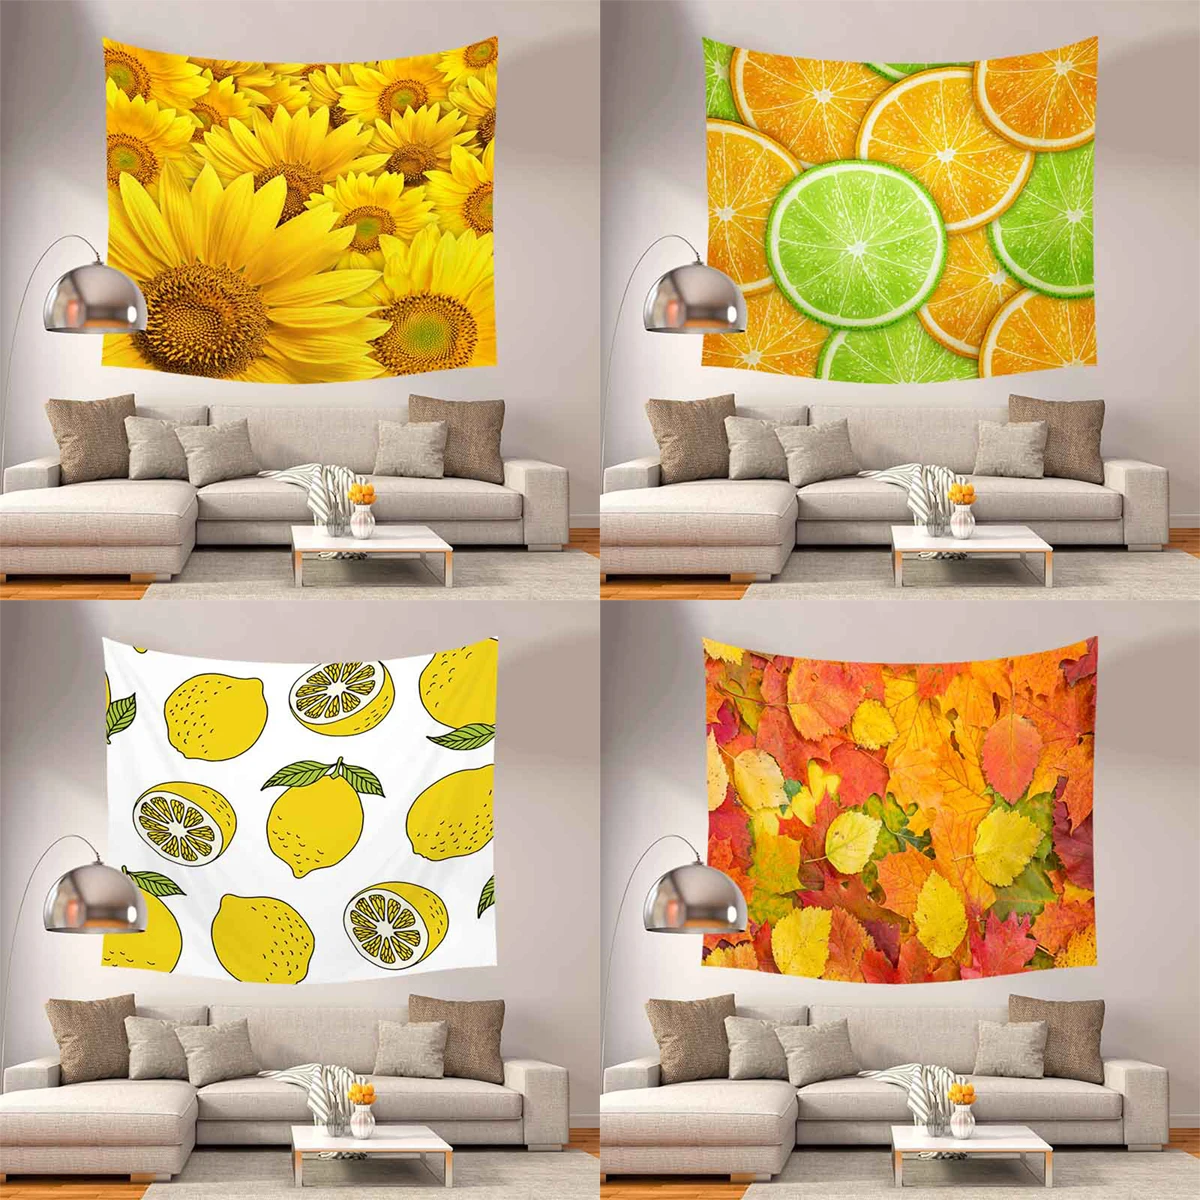 

ZHENHE Sunflower Fruit Leaves Tapestry Home Decor Wall Hanging Tapestries Boho Bedspread Yoga Mat Blanket